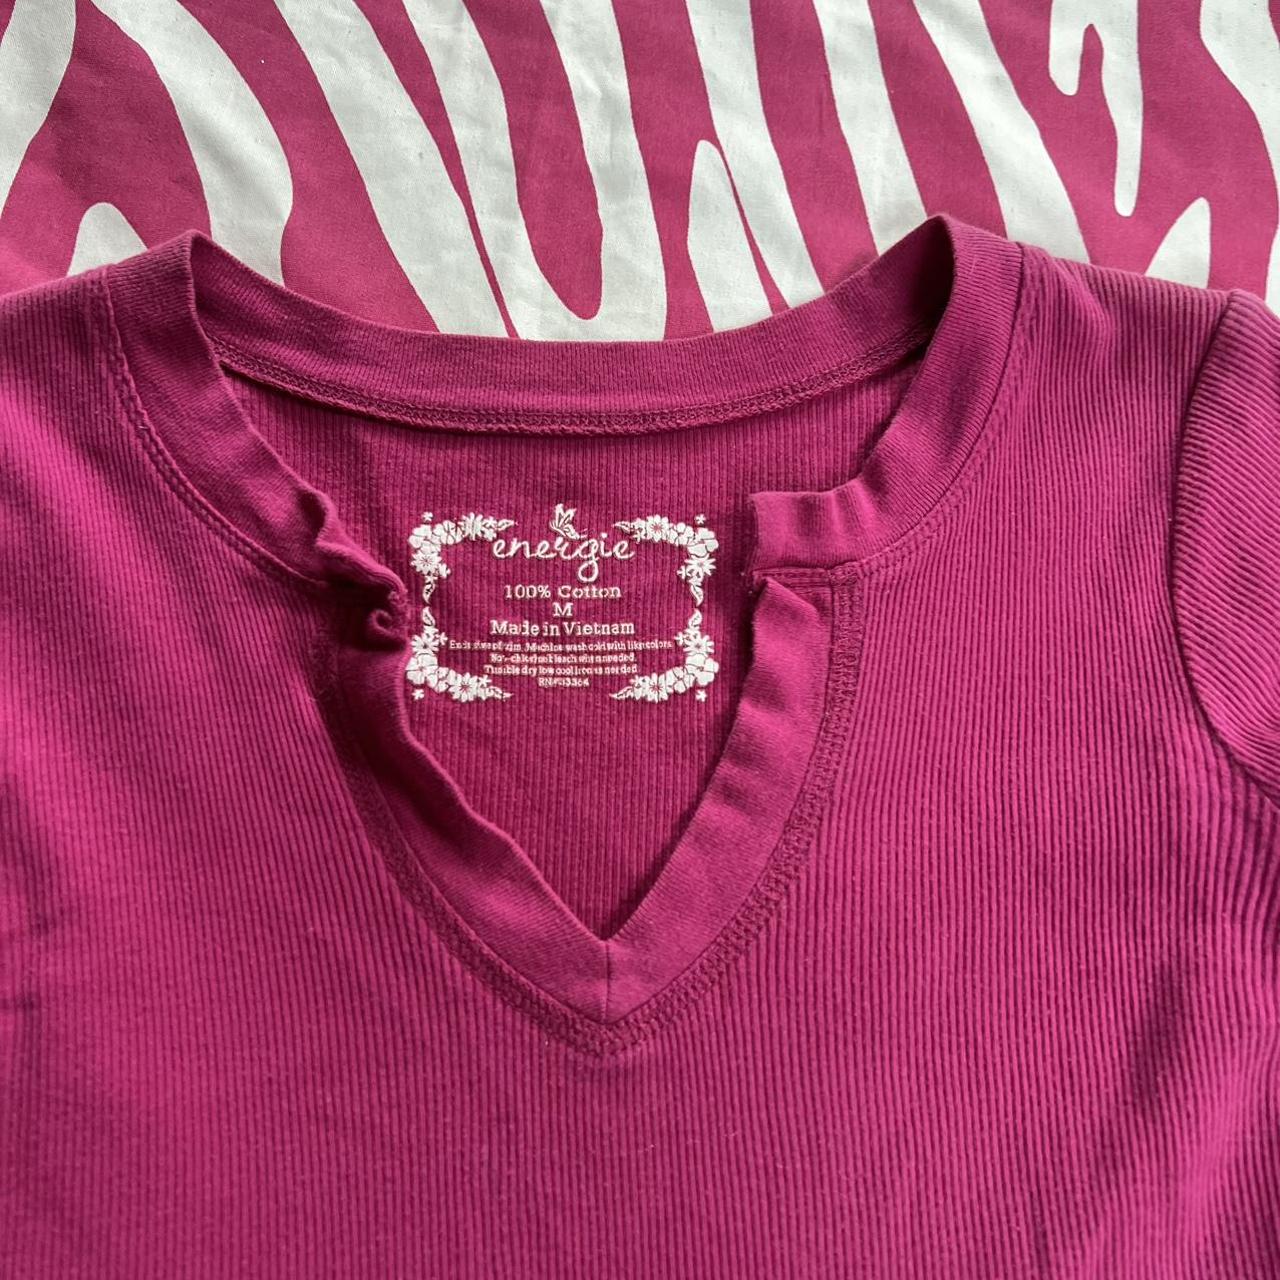 Energie Women's Pink T-shirt (2)